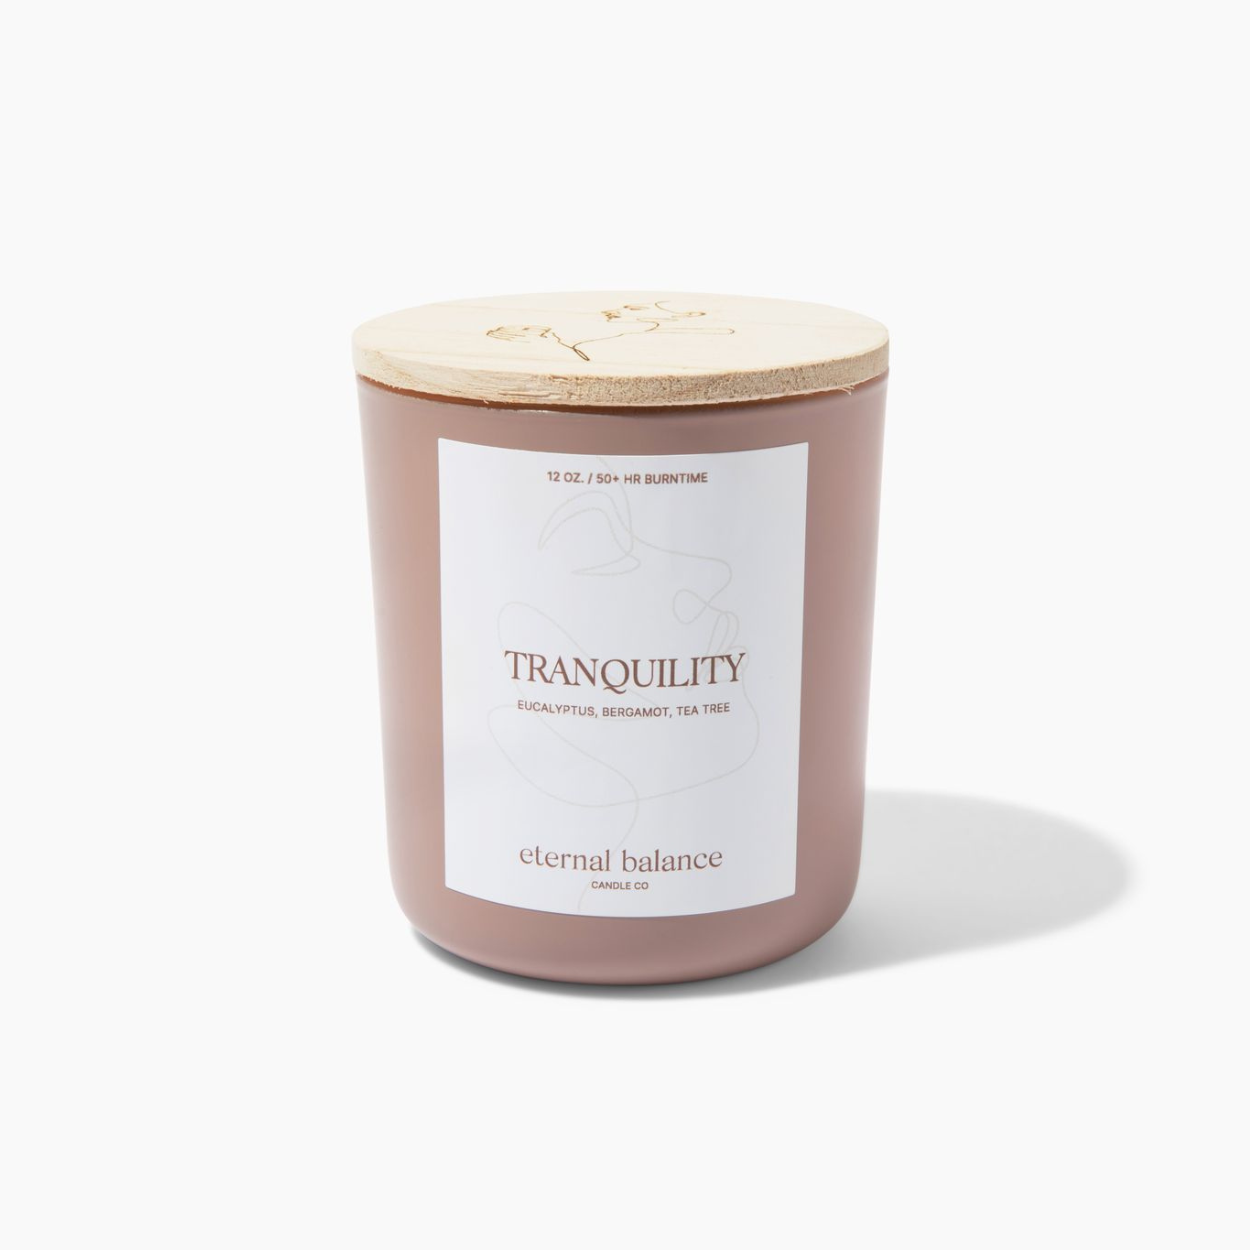 Tranquility | Eucalyptus, Bergamot, Tea Tree